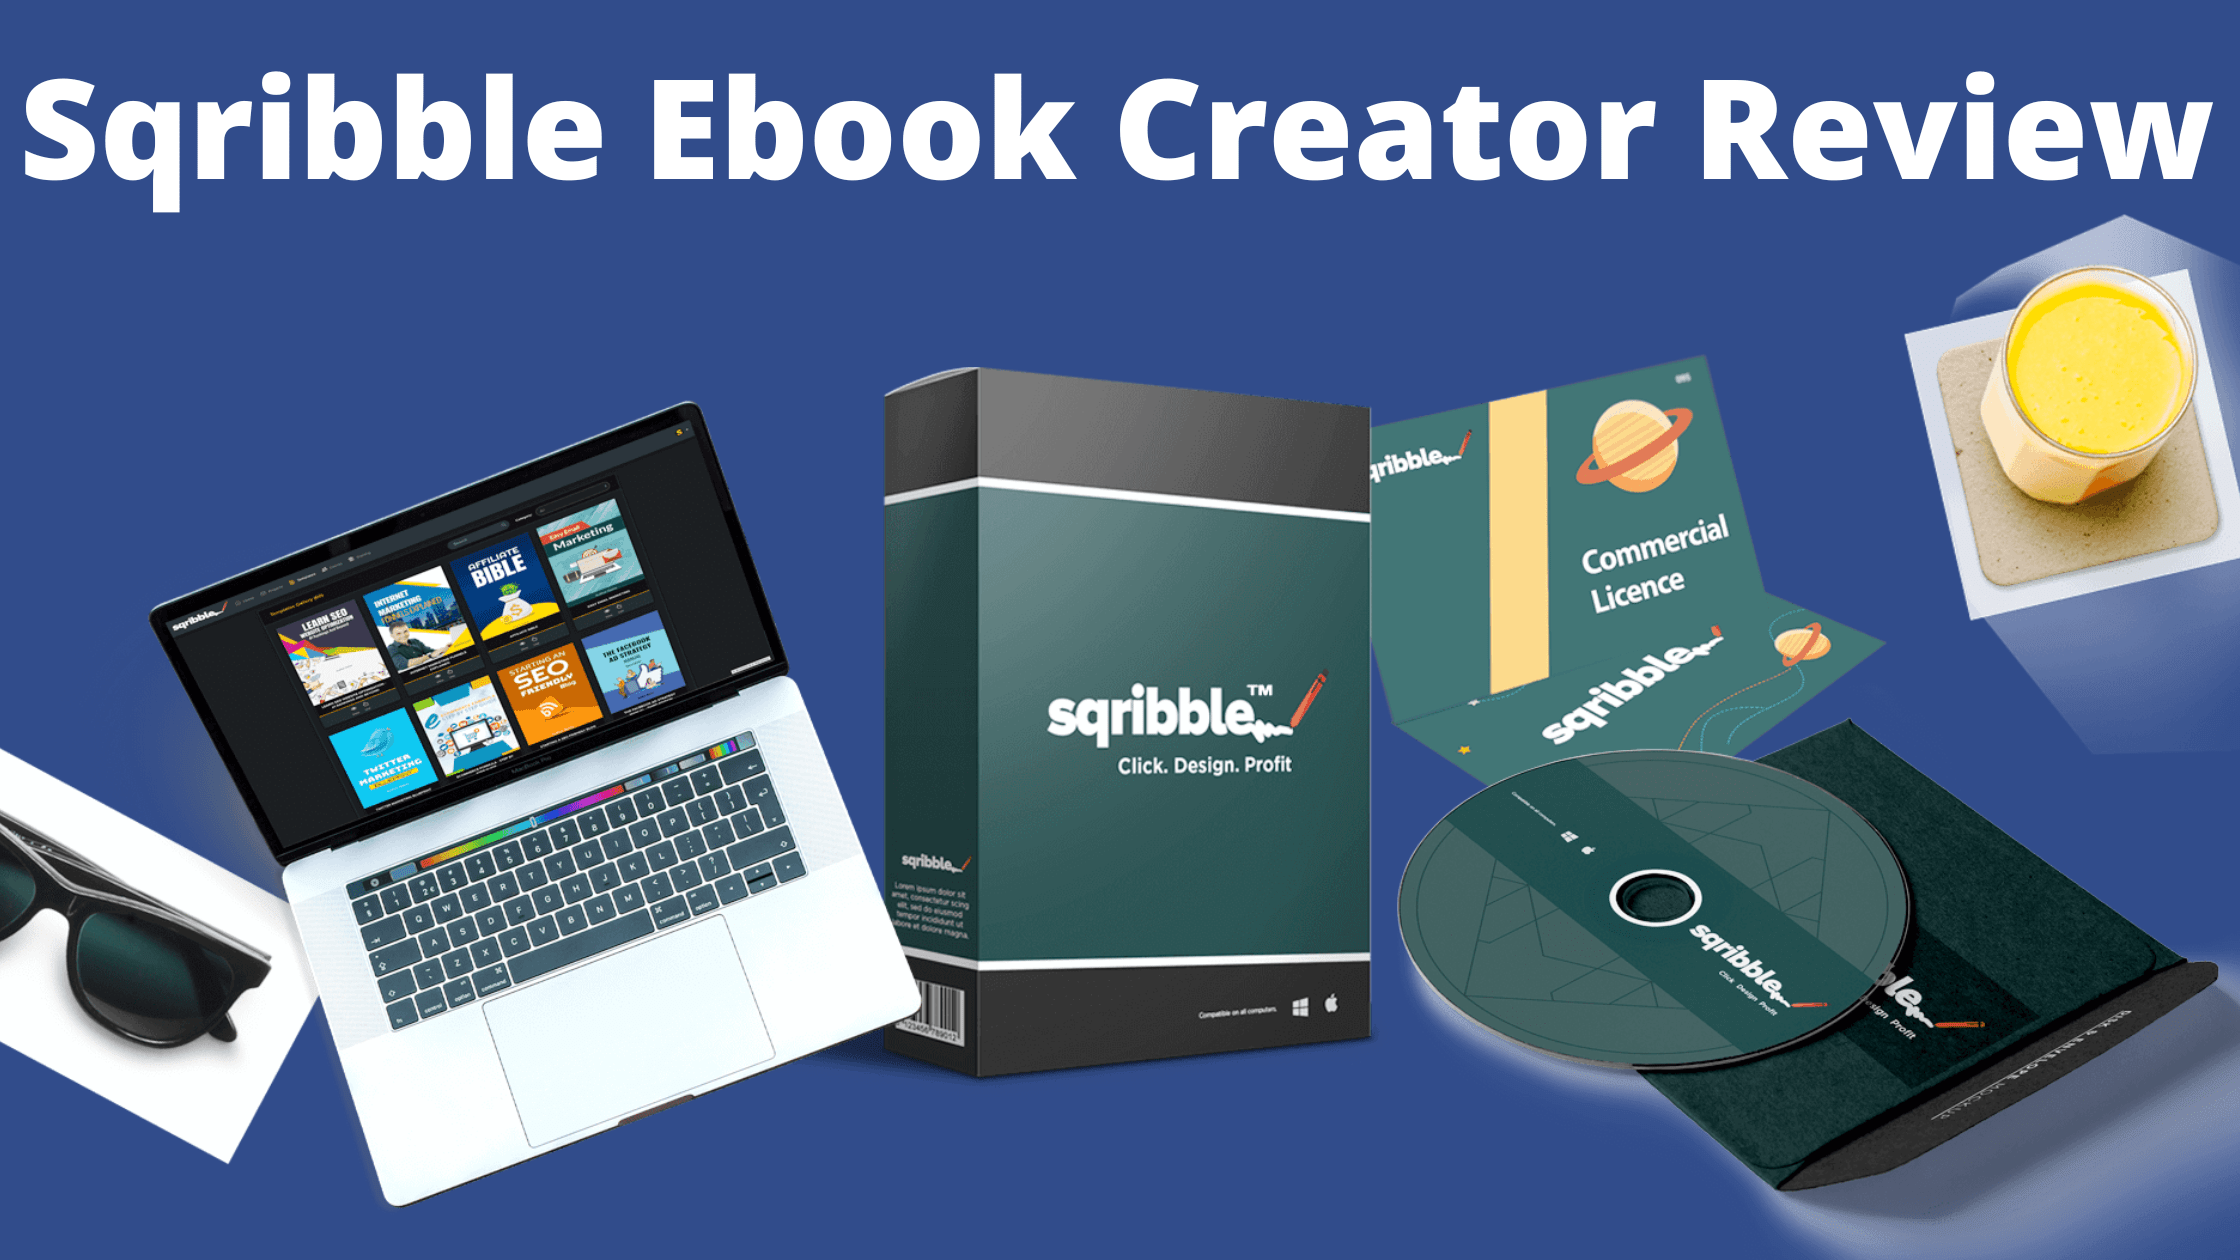 Sqribble Ebook Creator Review